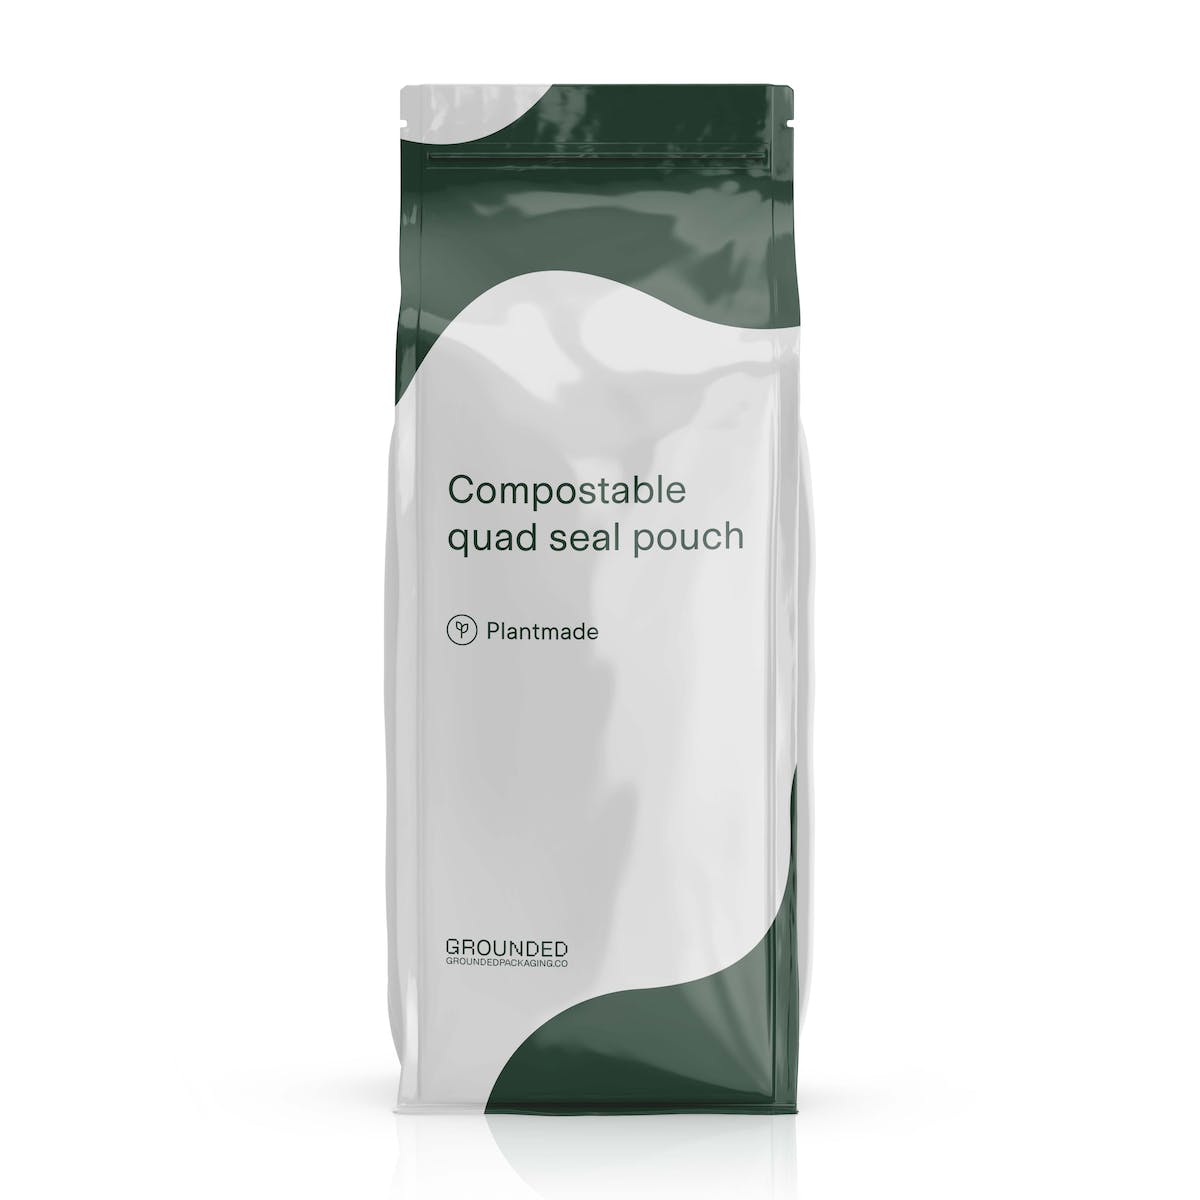 Compostable quad seal pouch 1